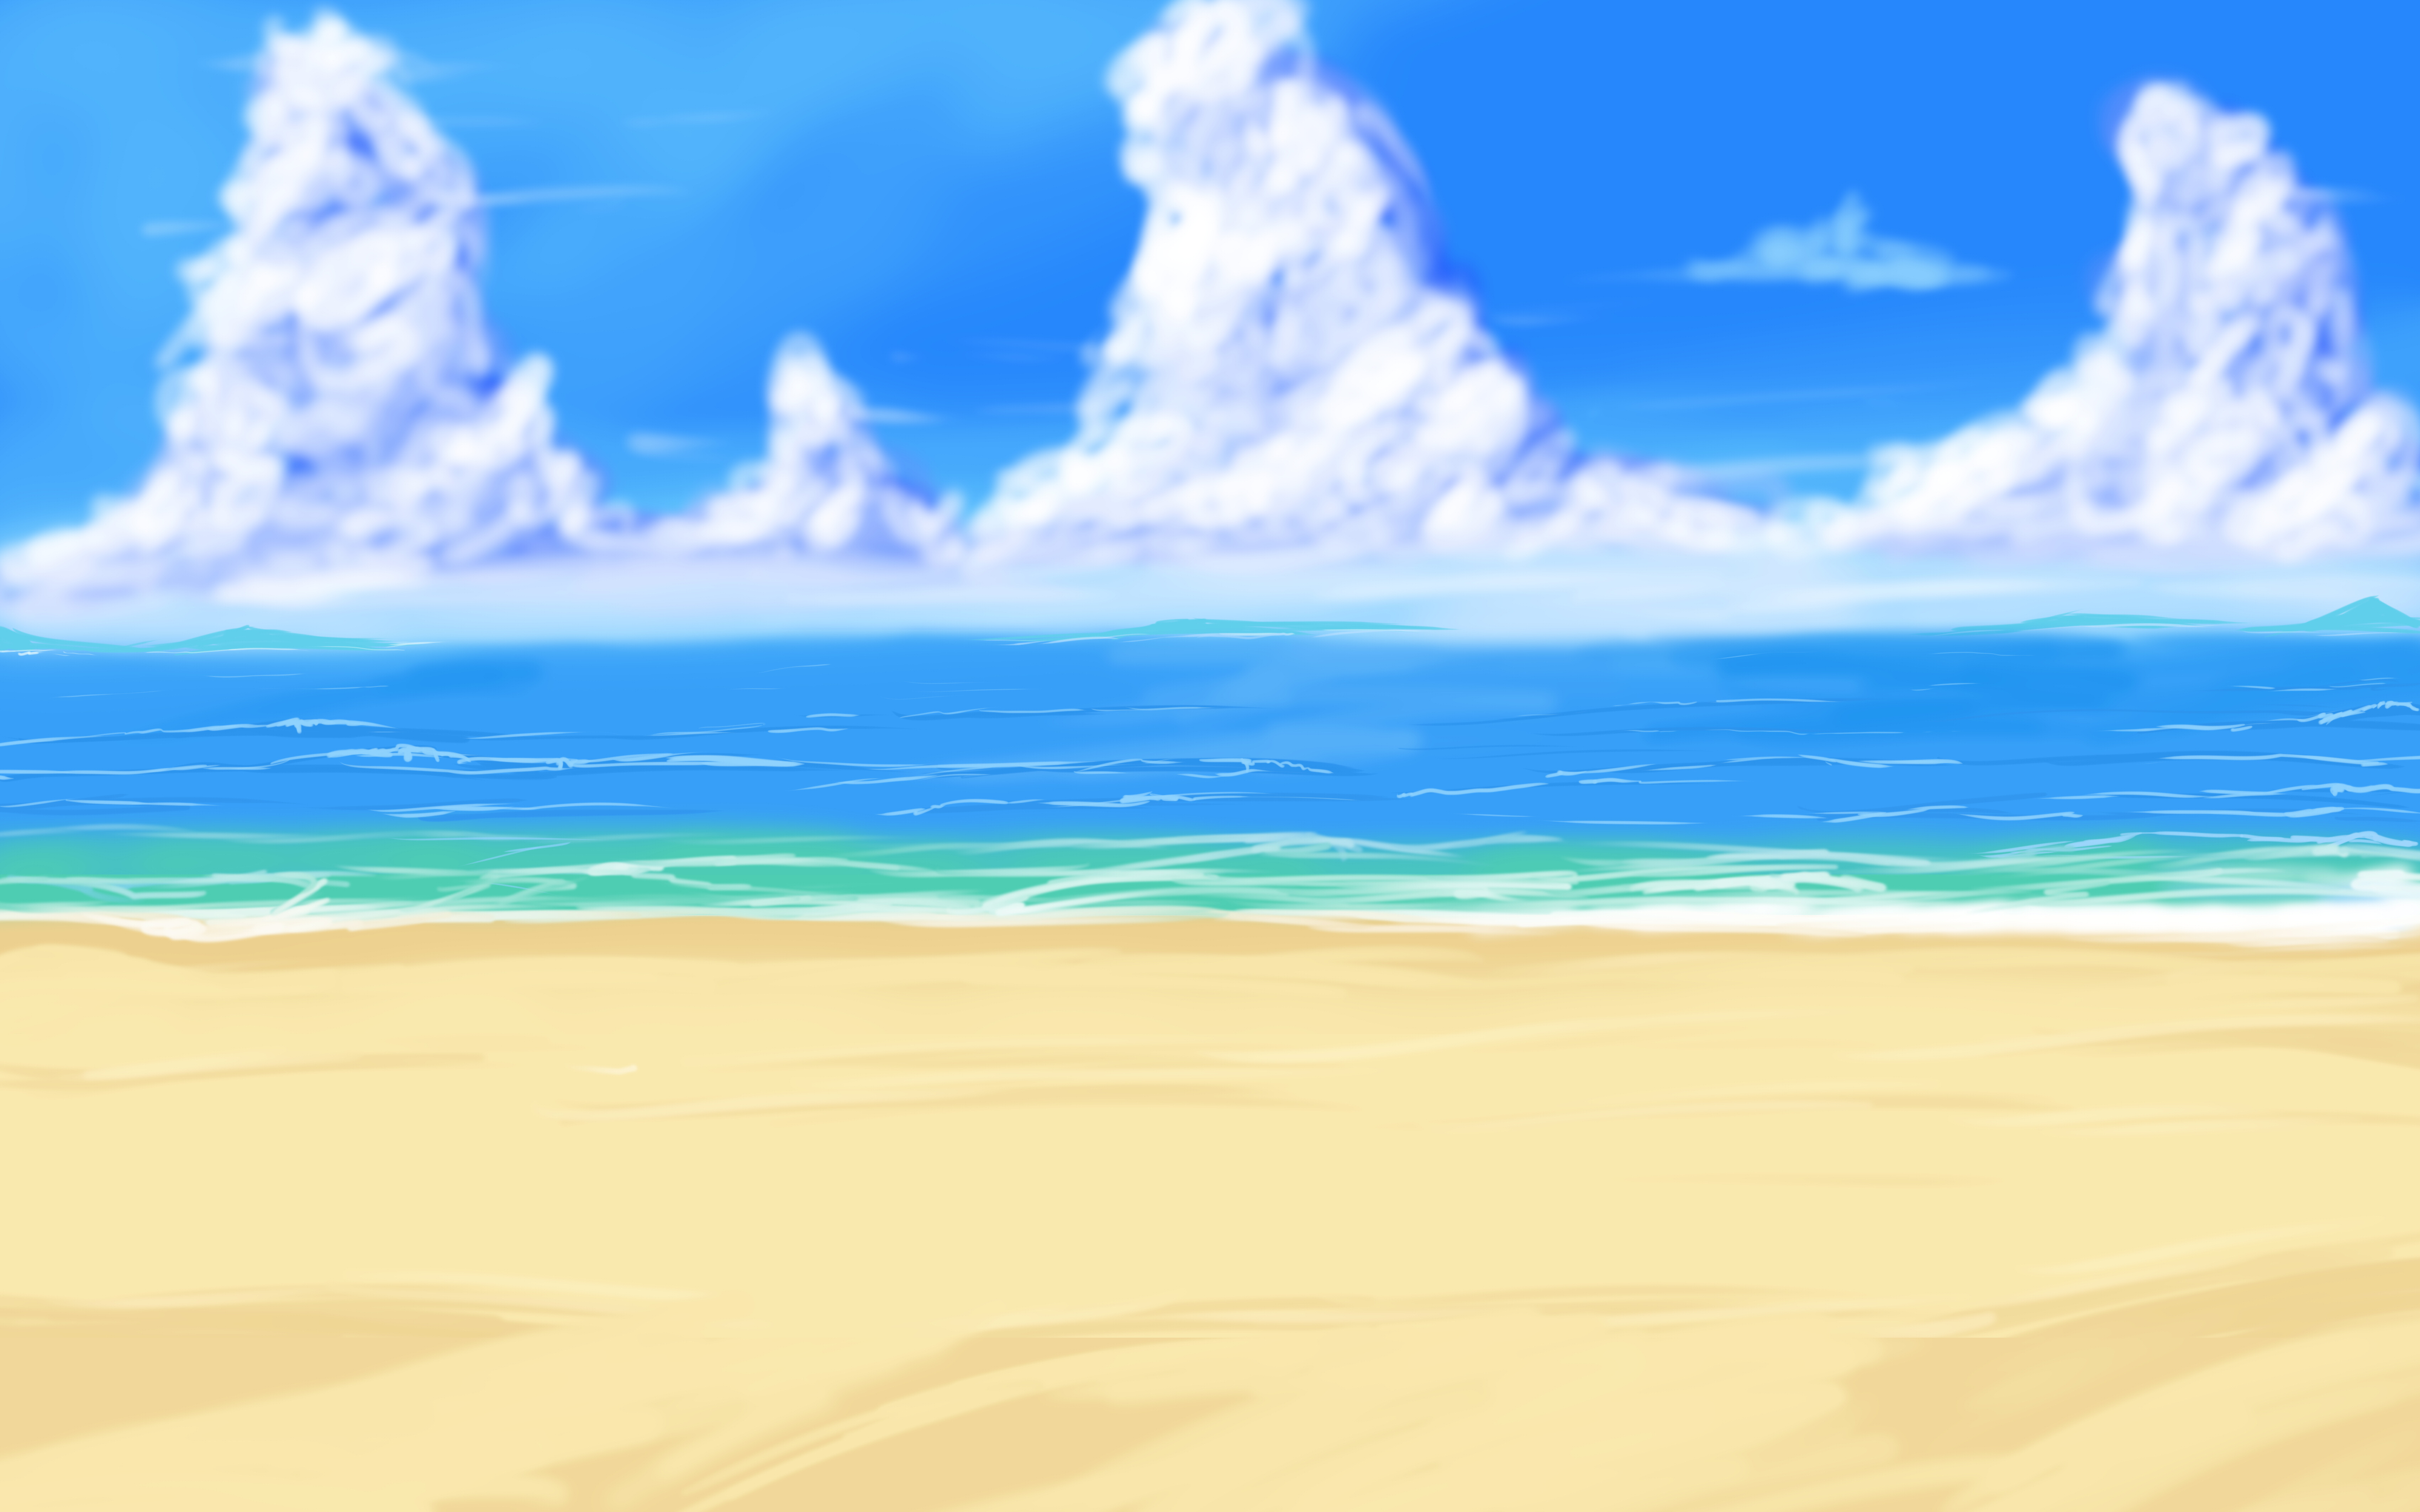 Big Anime Style Beach Background By Wbd